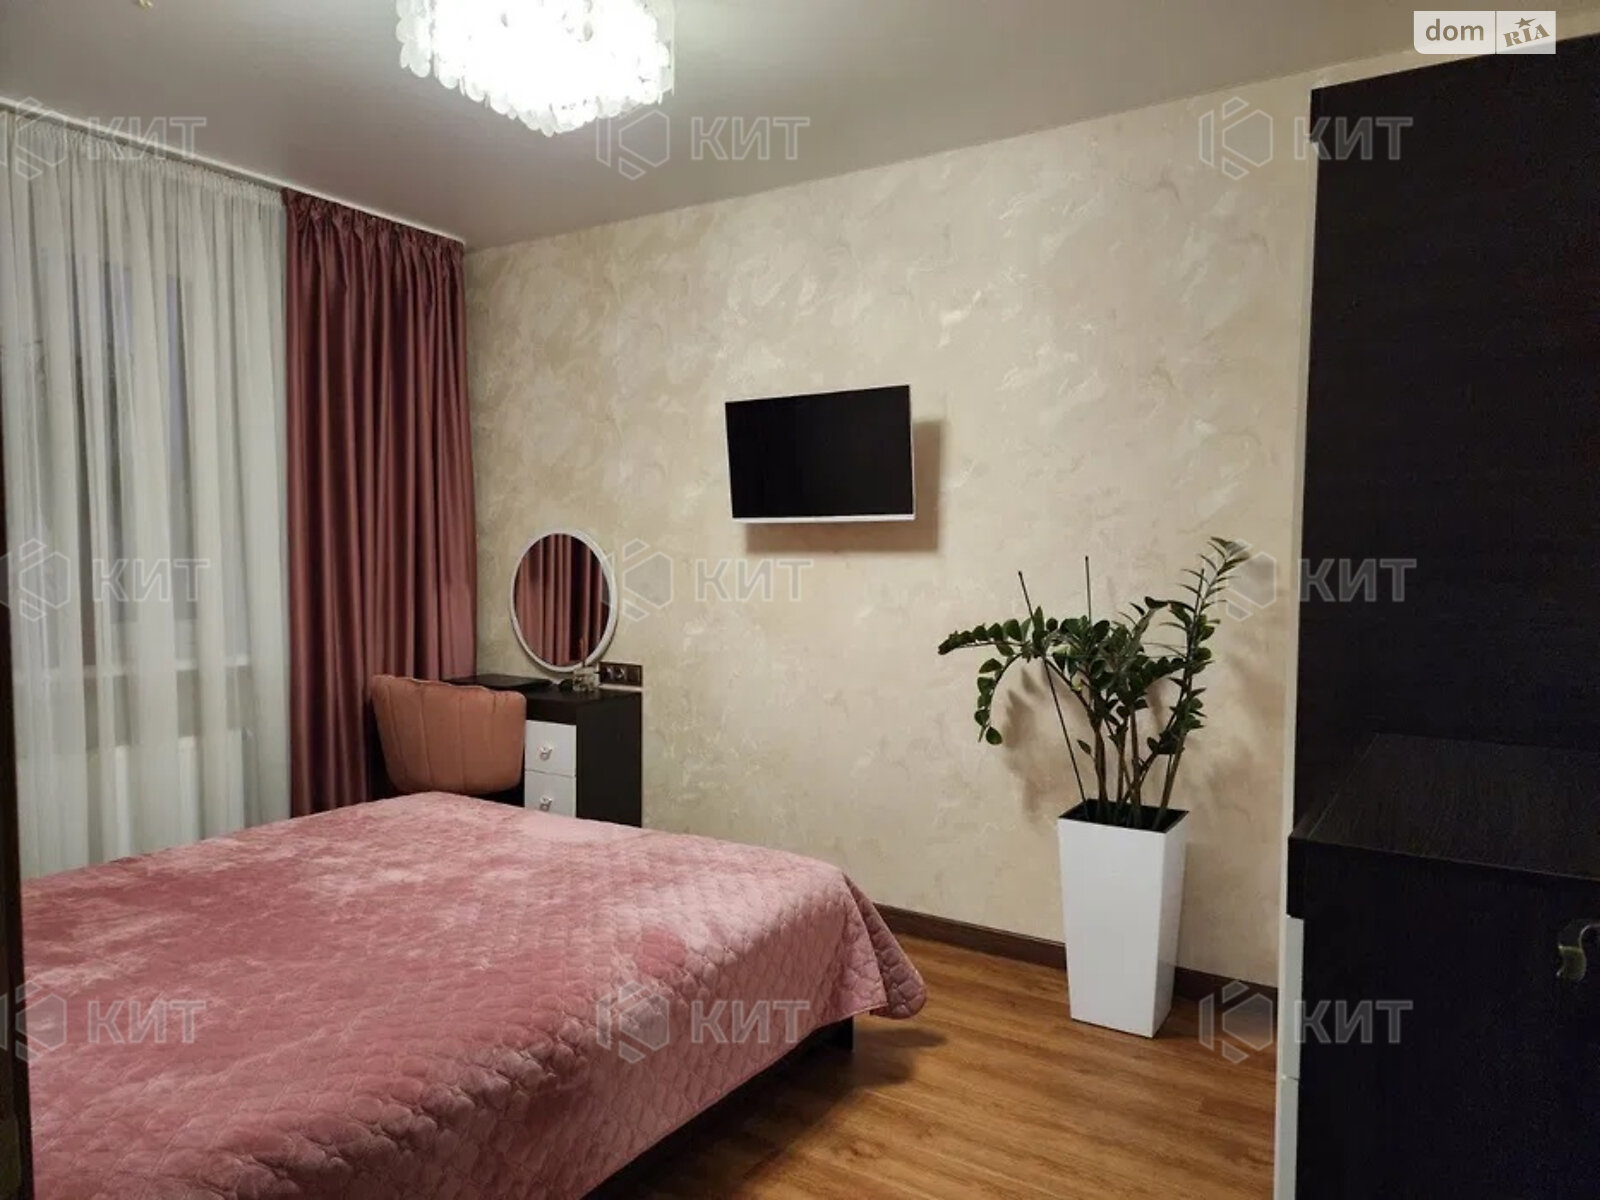 Продаж двокімнатної квартири в Харкові, на просп. Героїв Харкова 264, район ХТЗ фото 1